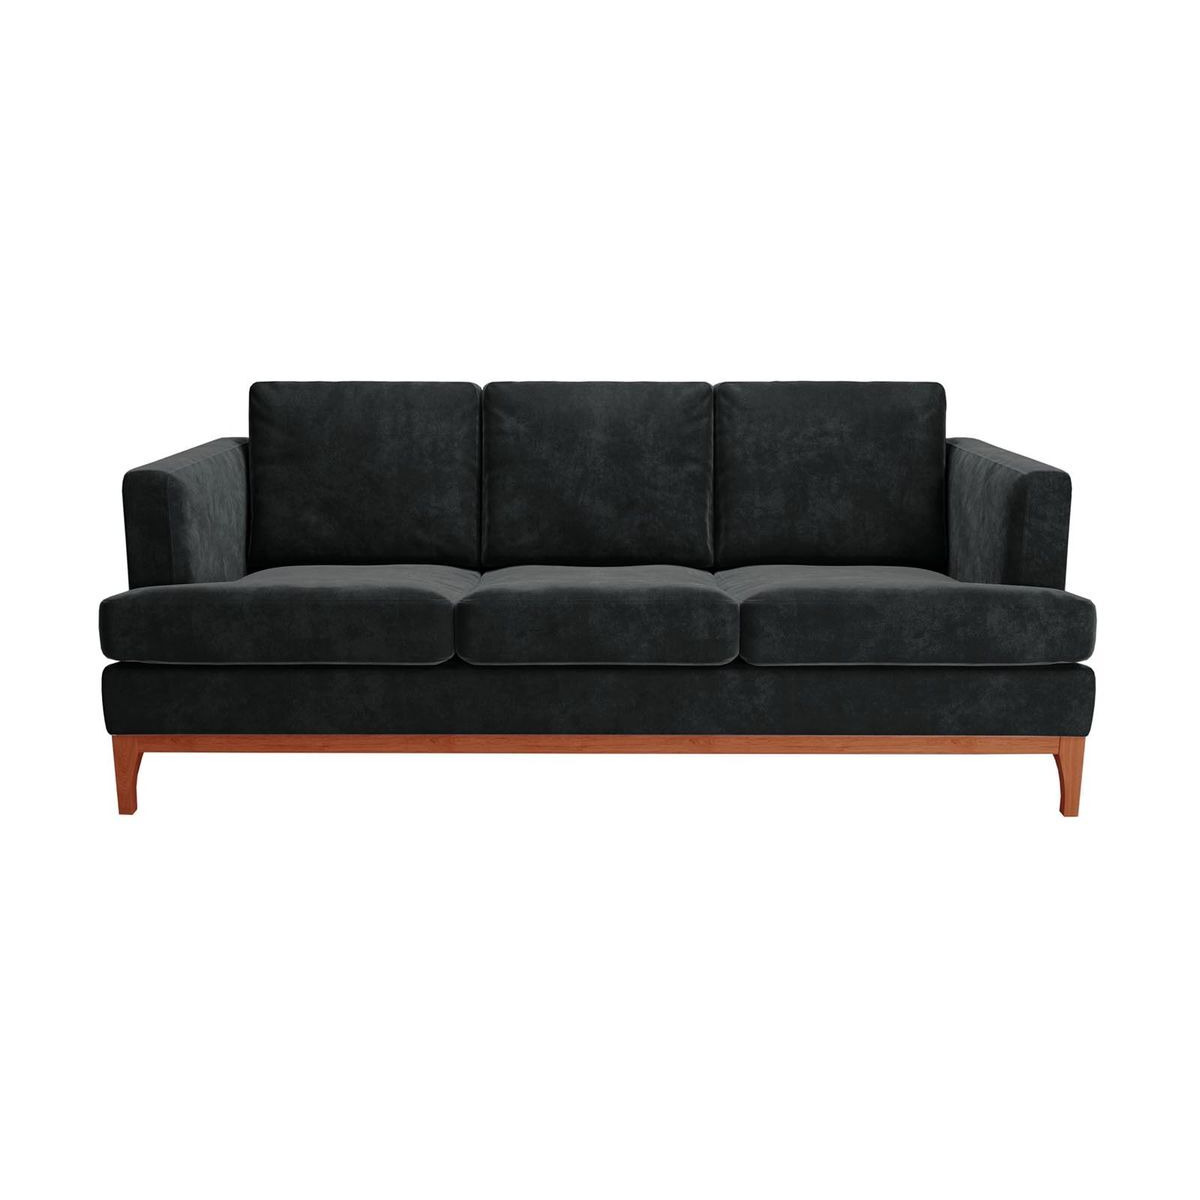 Scarlett Eco 3 Seater Sofa, black, Leg colour: aveo - image 1